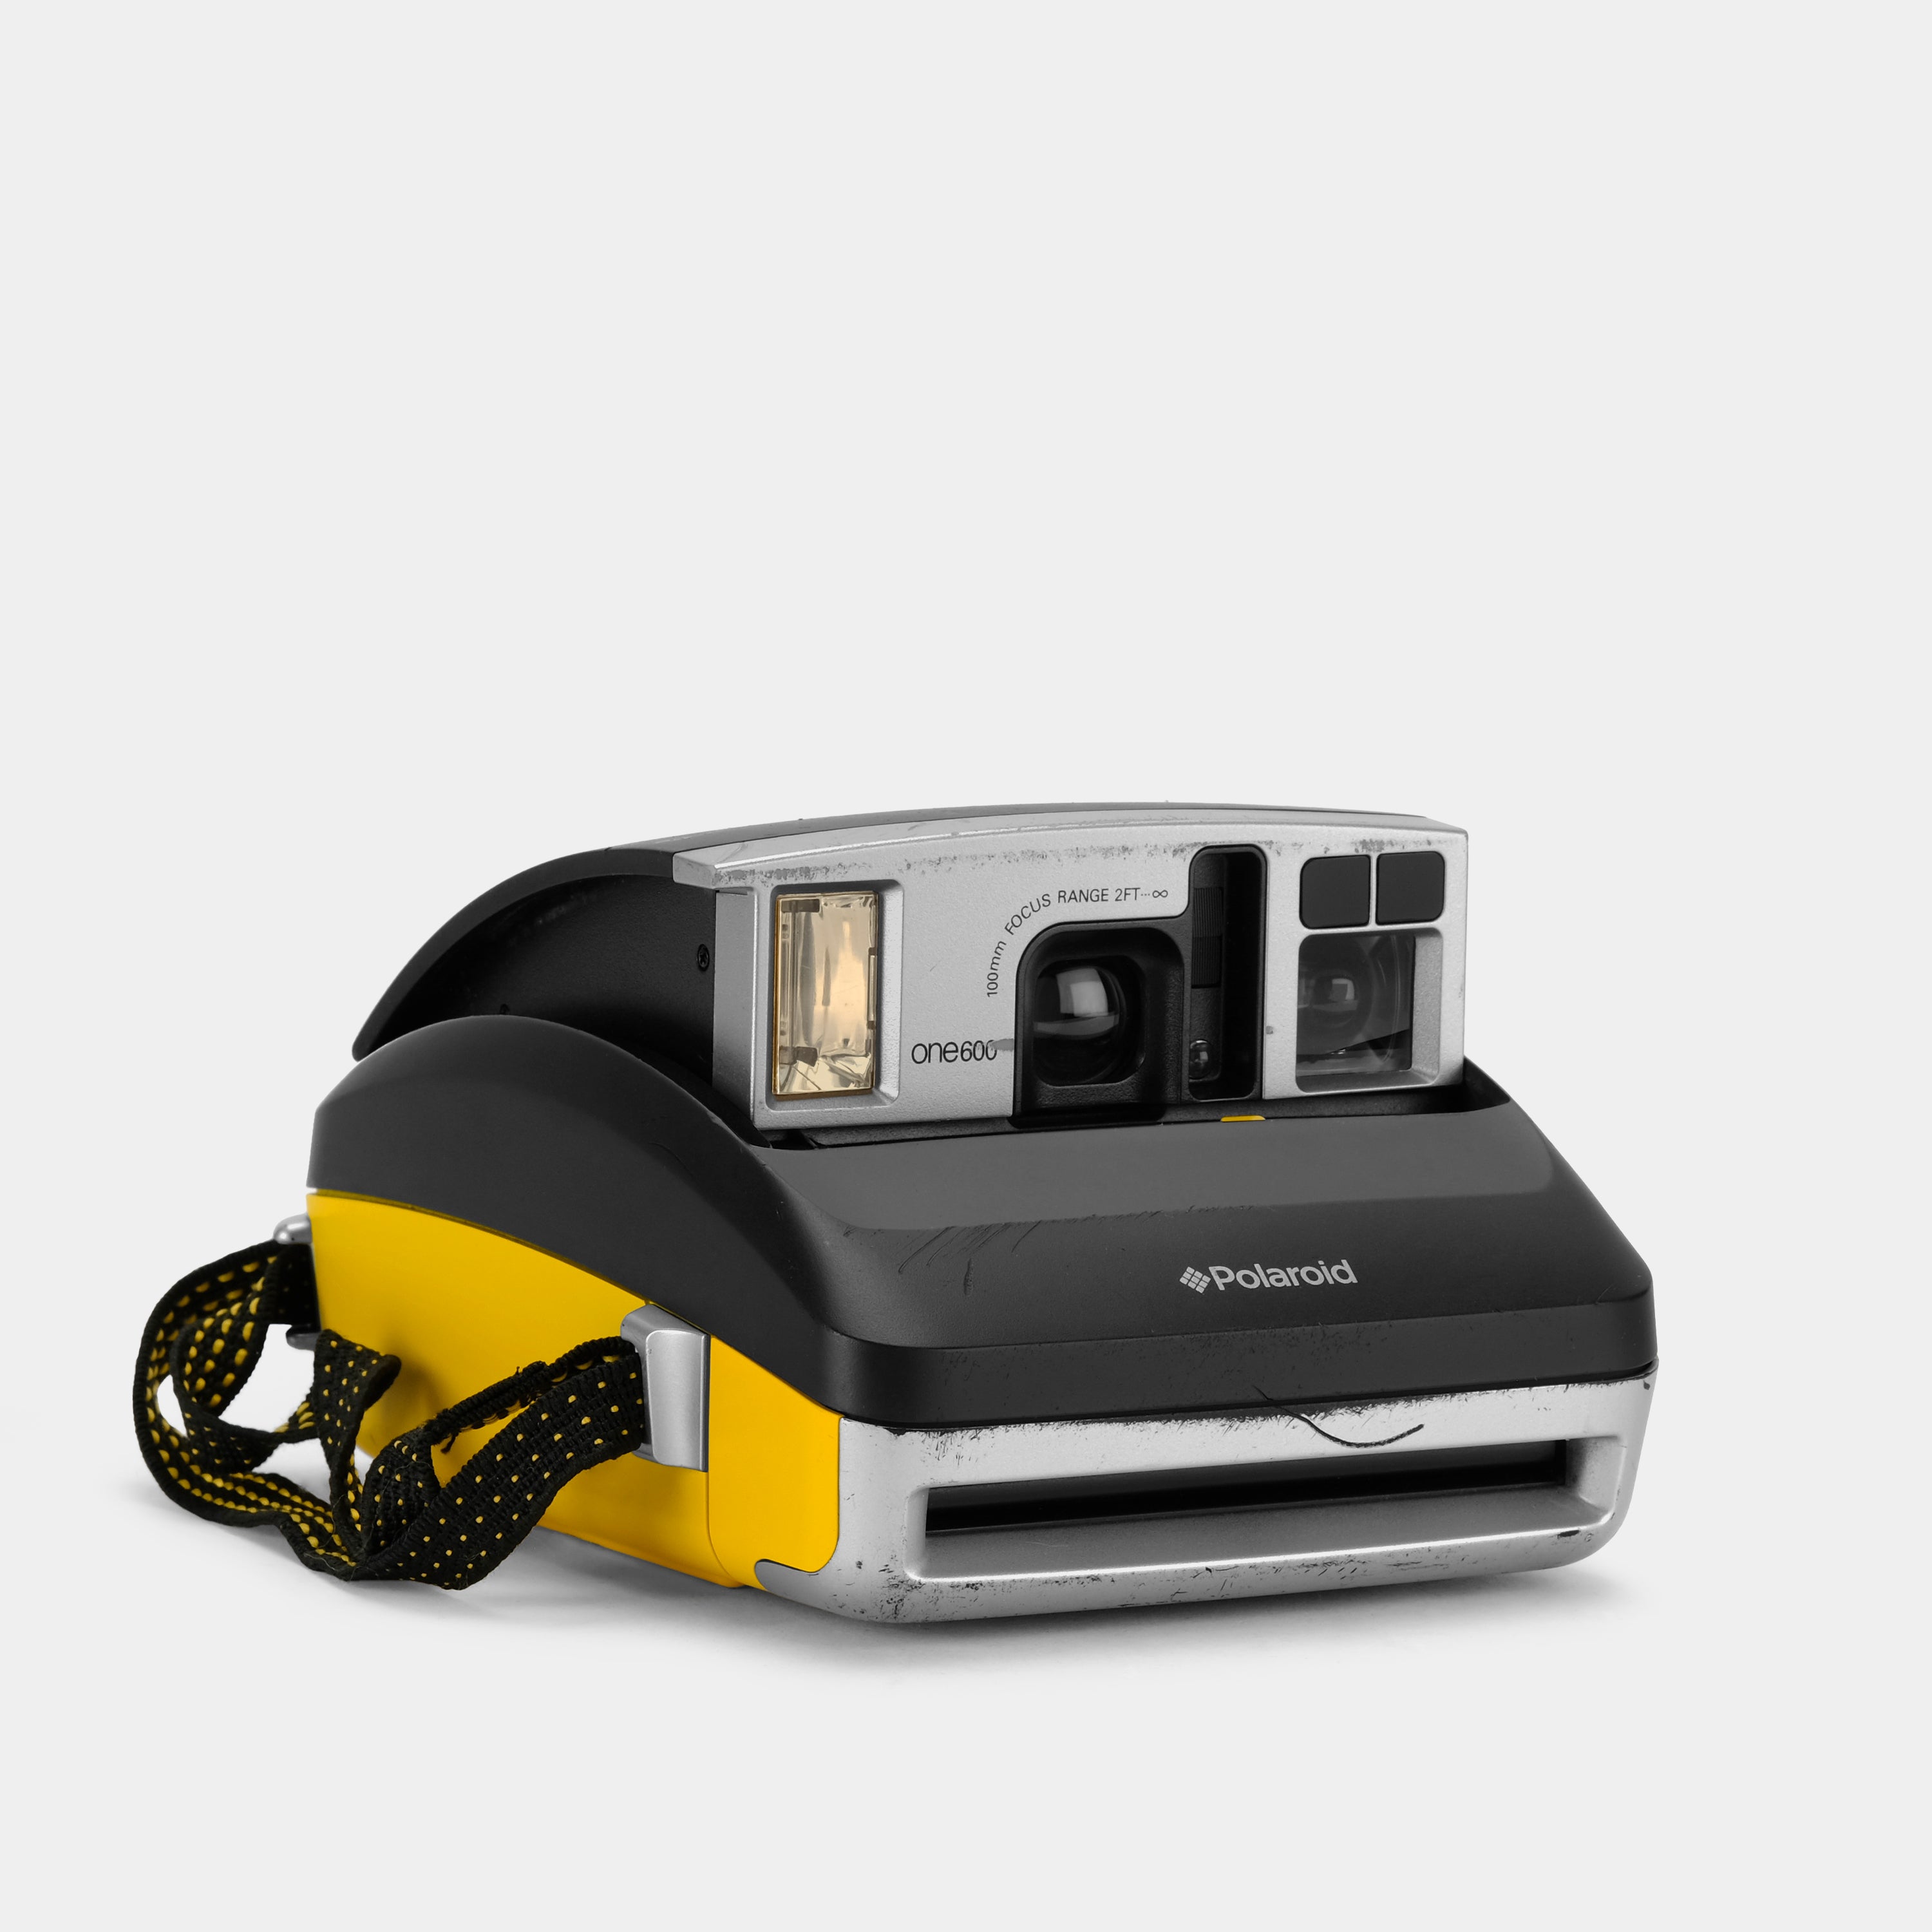 Polaroid One600 "JobPro" Black and Yellow Instant Film Camera (B-Grade)